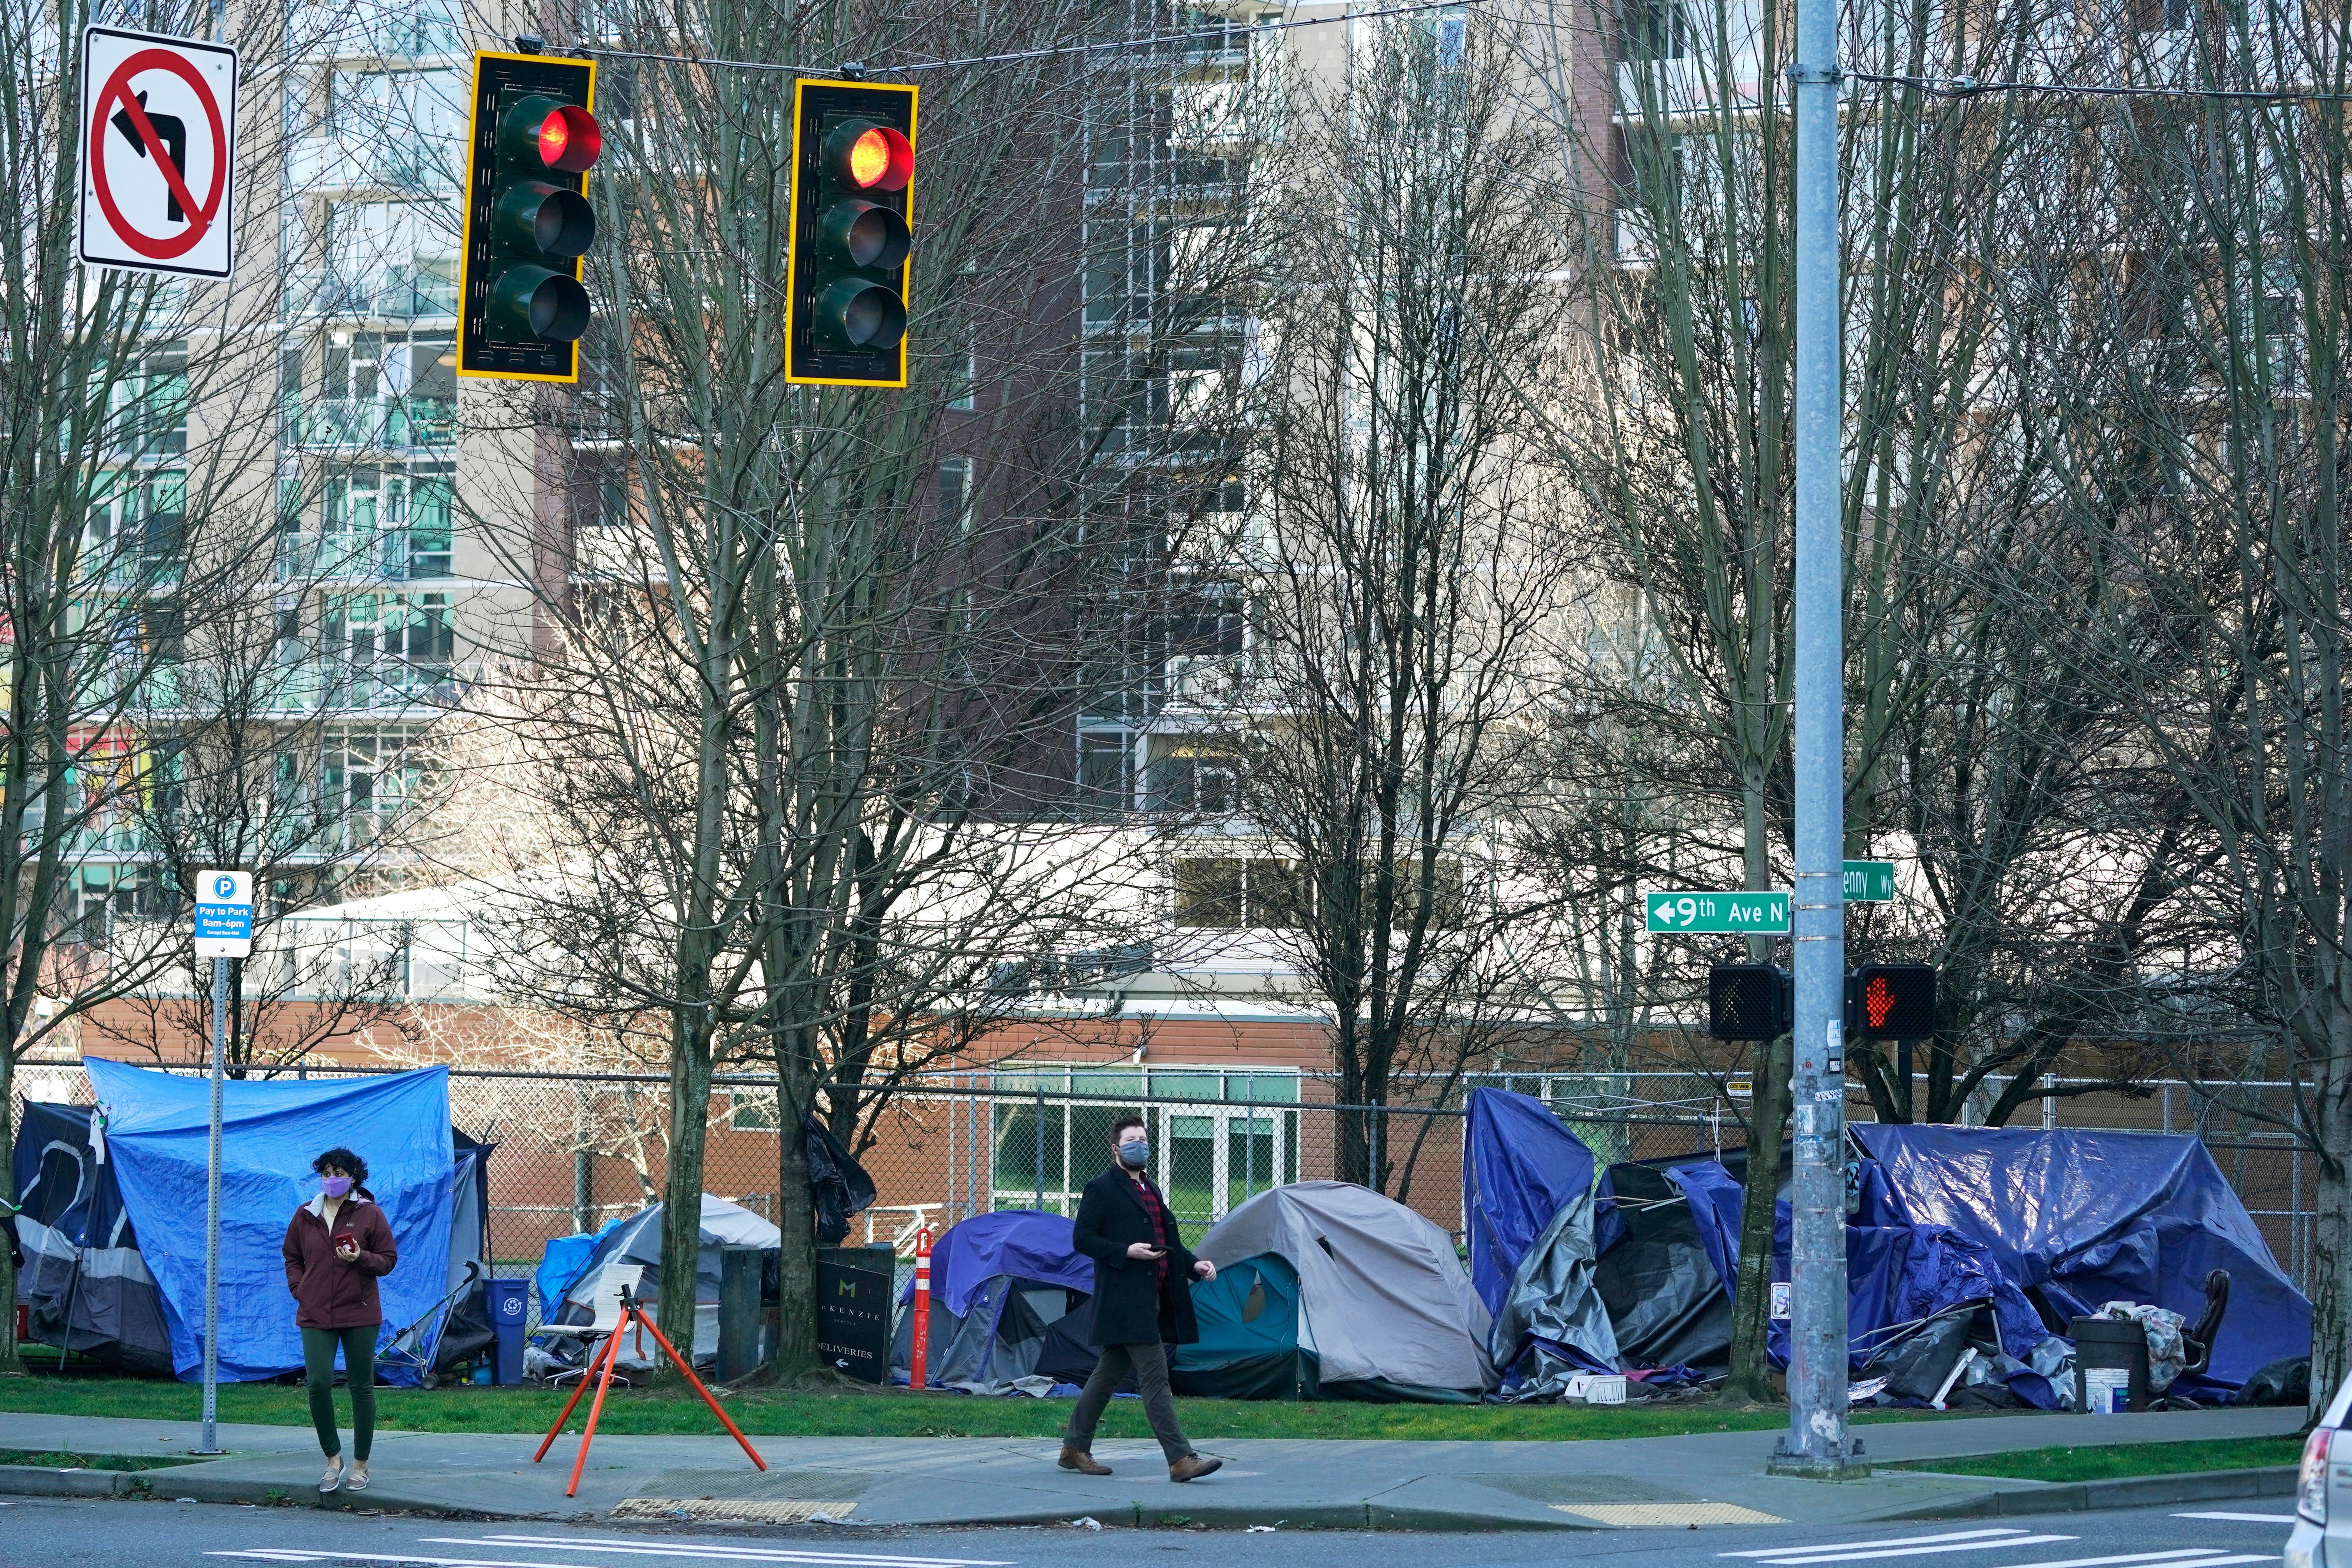 Seattle Homeless